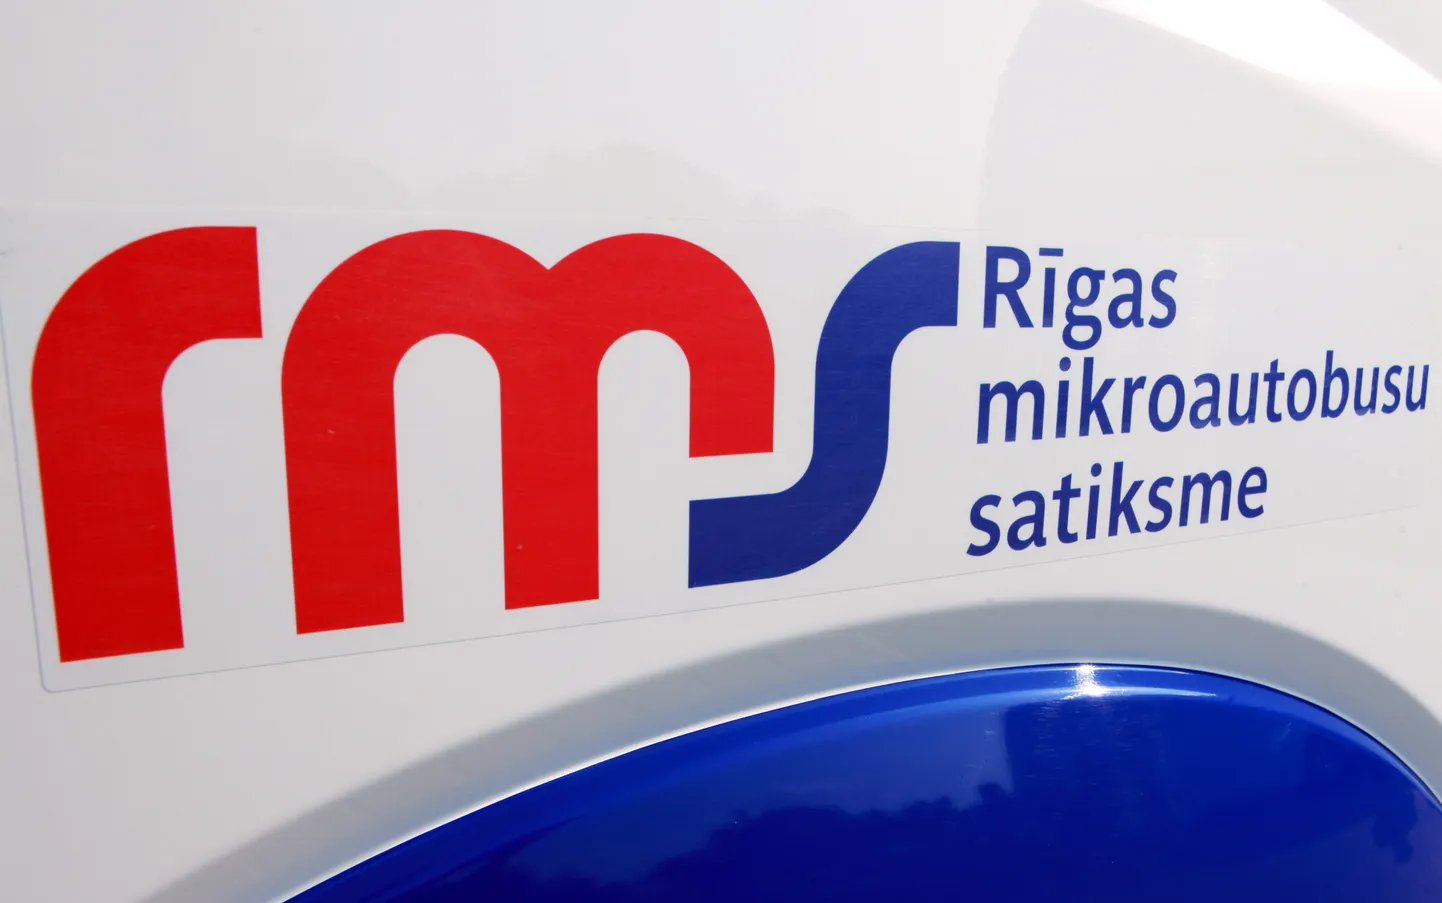 Rīgas mikroautobusu satiksme. Иллюстративное фото.